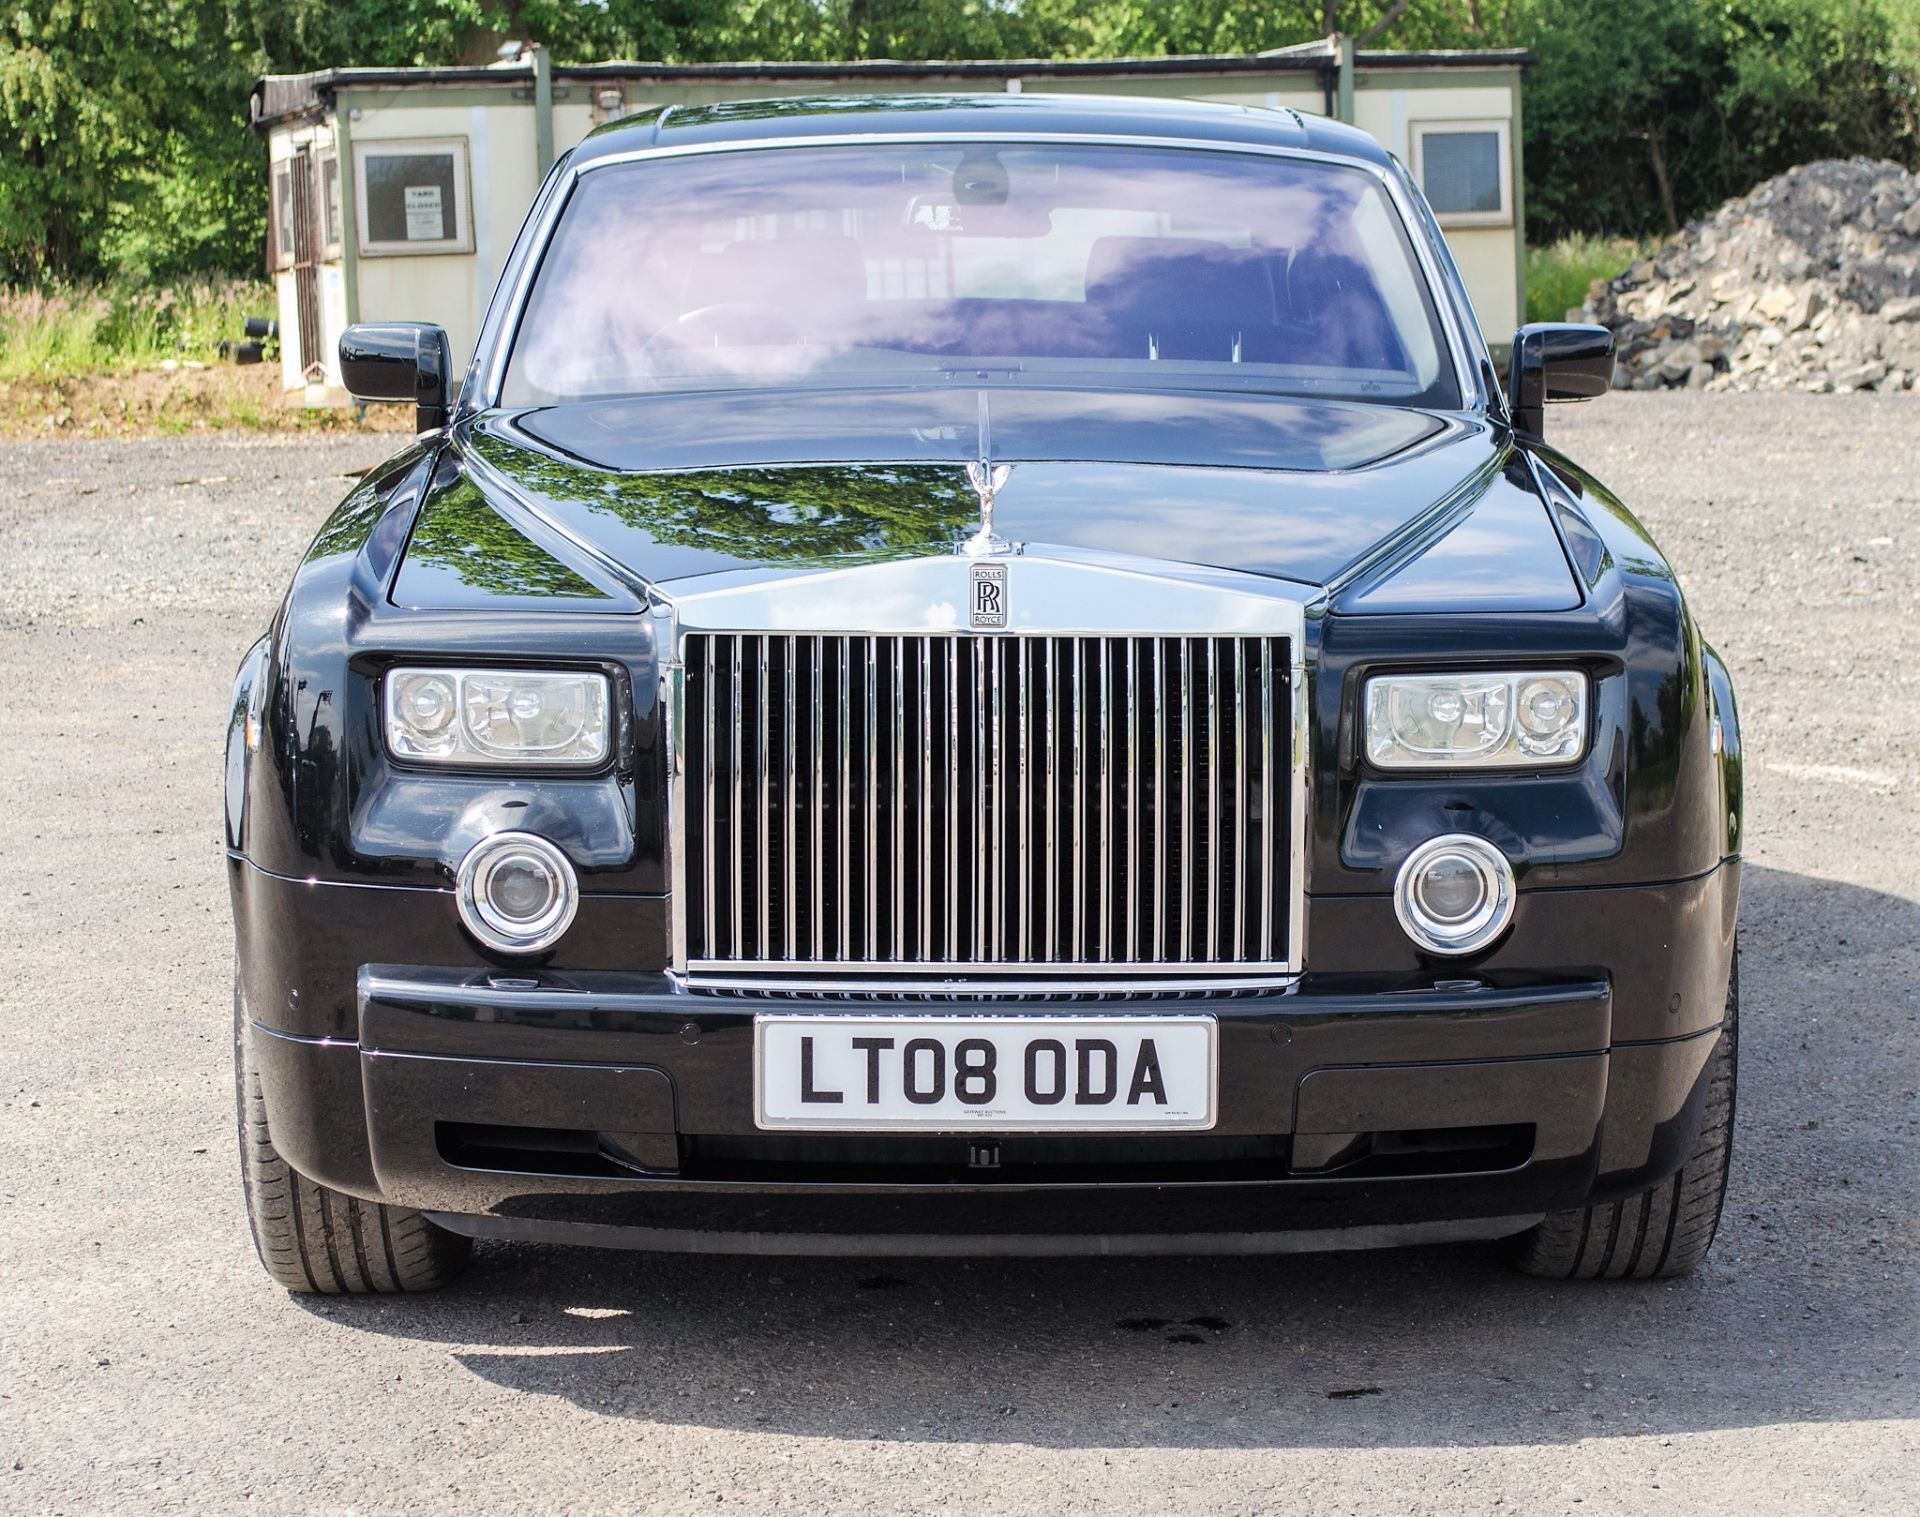 Rolls Royce Phantom VII 6.75 litre petrol 4 door saloon car  Reg No: LT 08 ODA Date of Registration: - Image 9 of 44